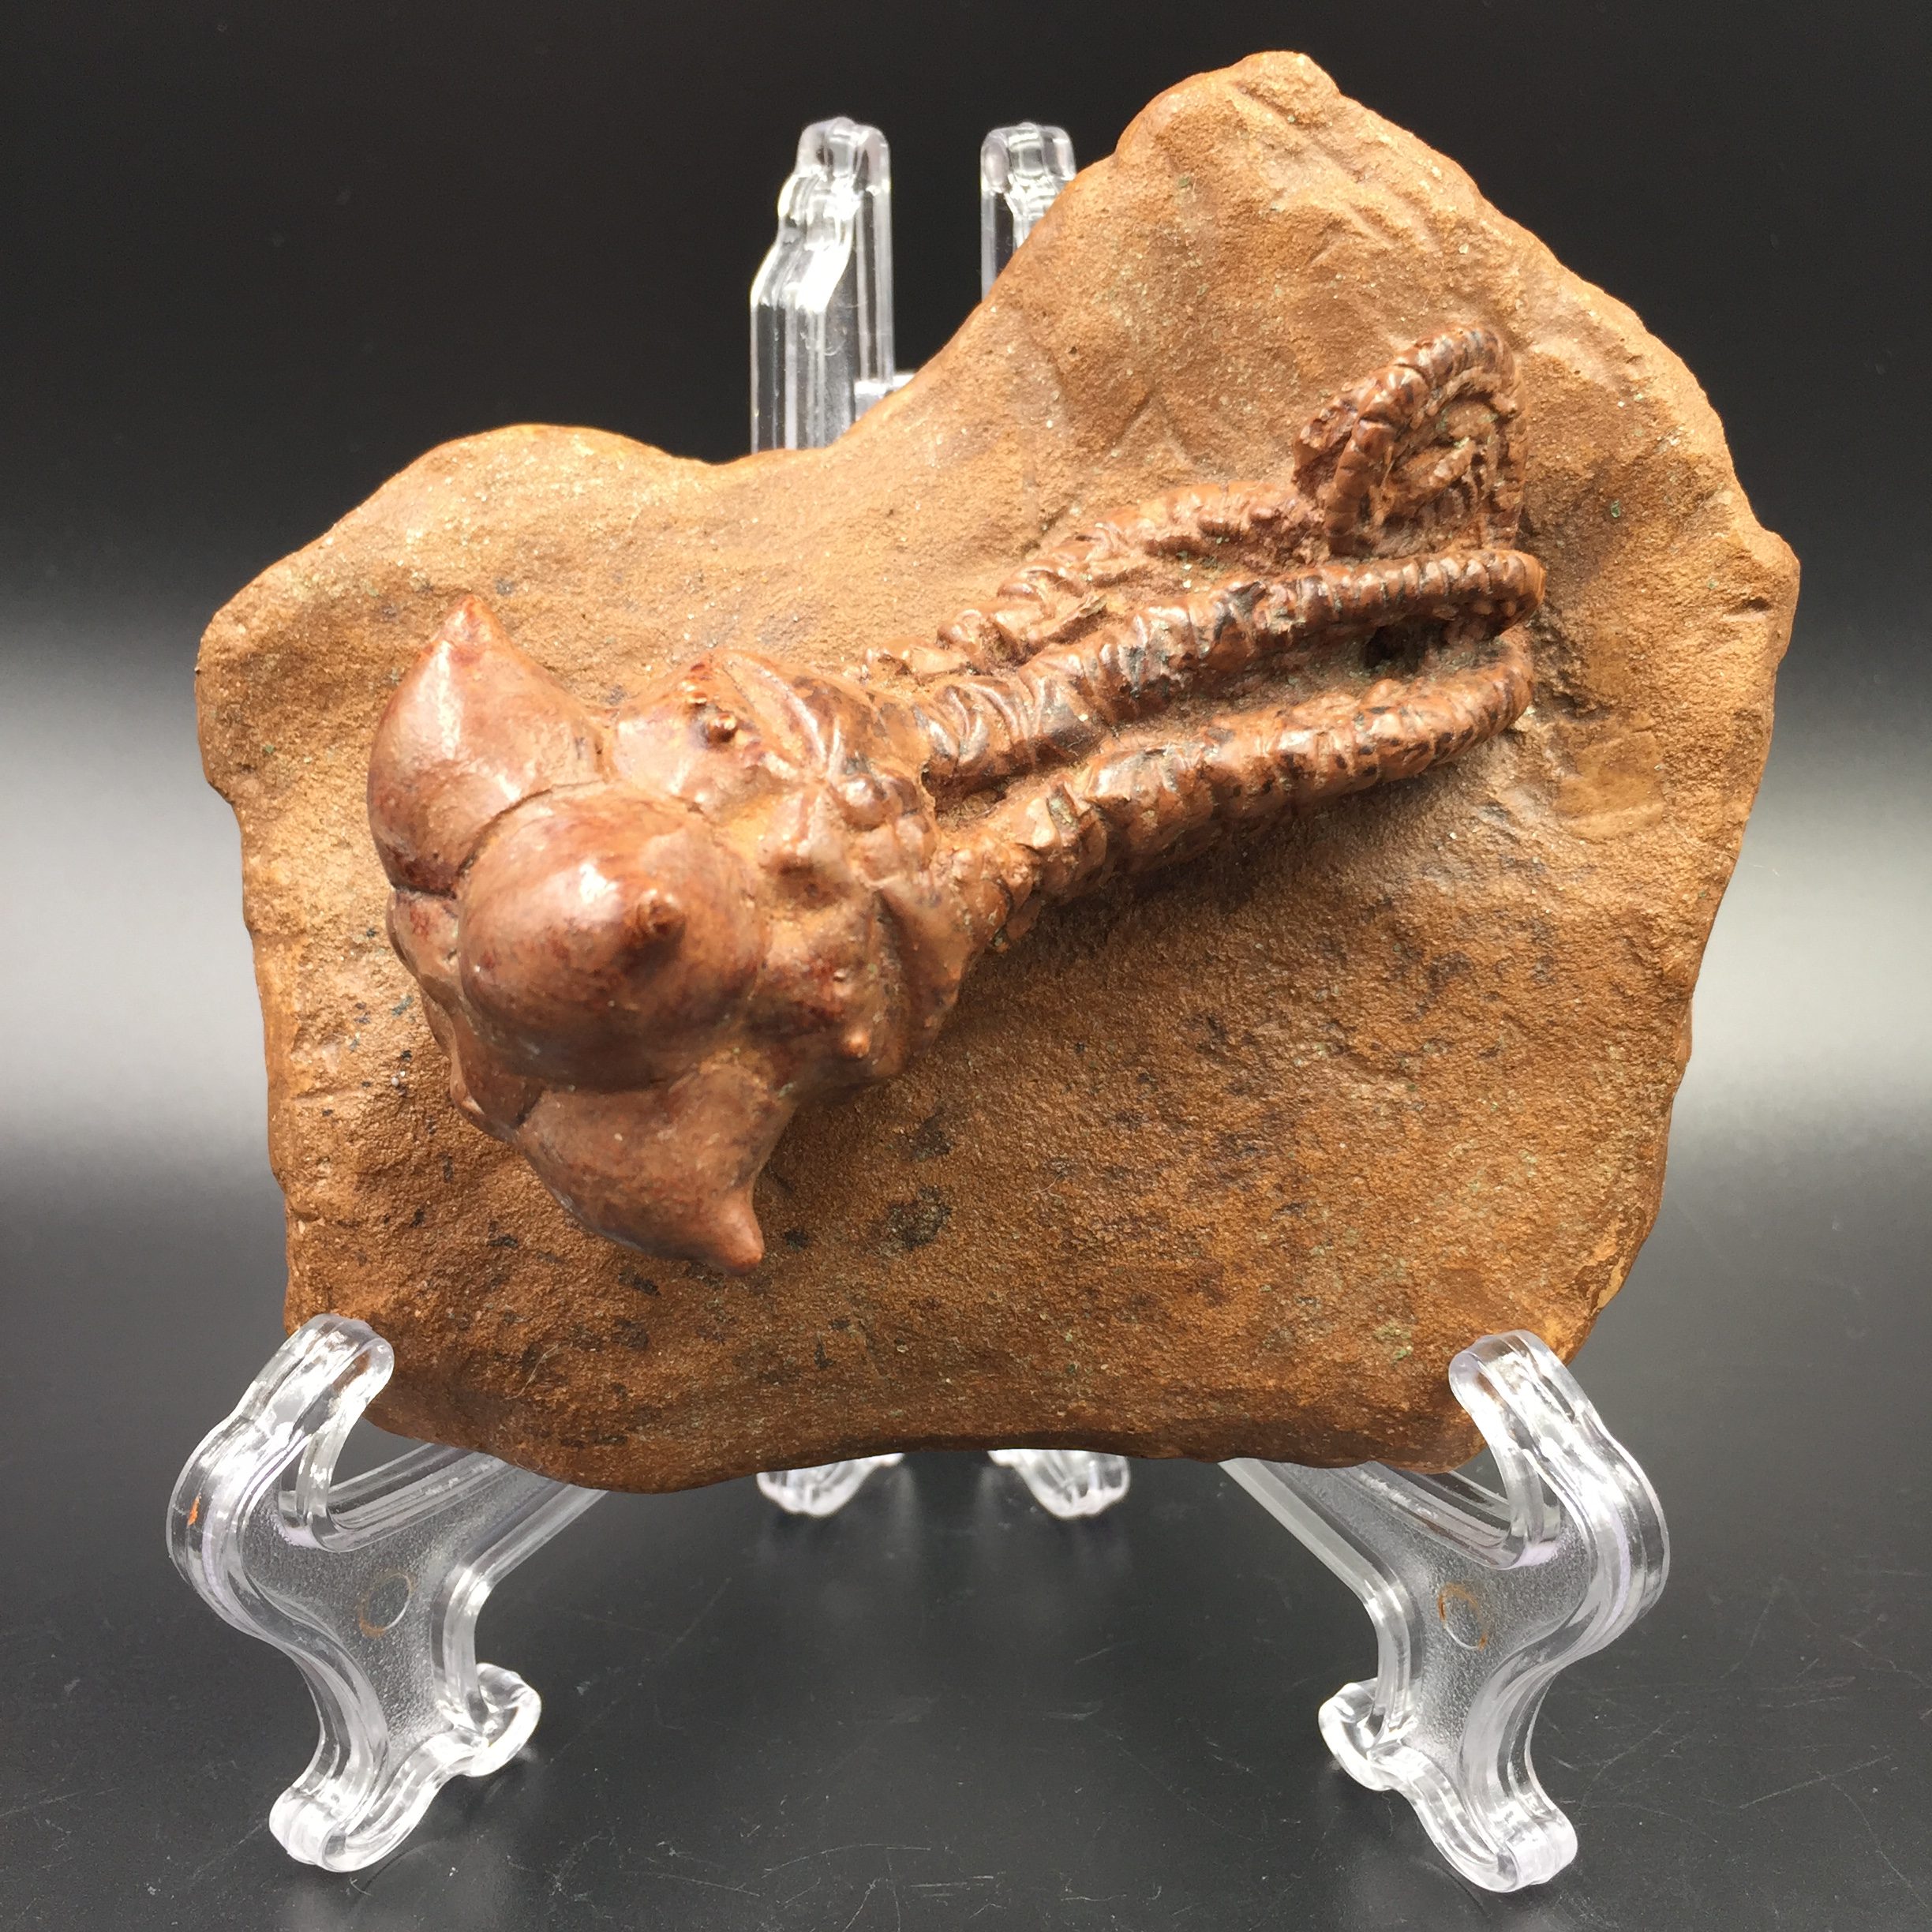 Encrine fossile “Jimbacrinus bostocki du permien” (reproduction résine)